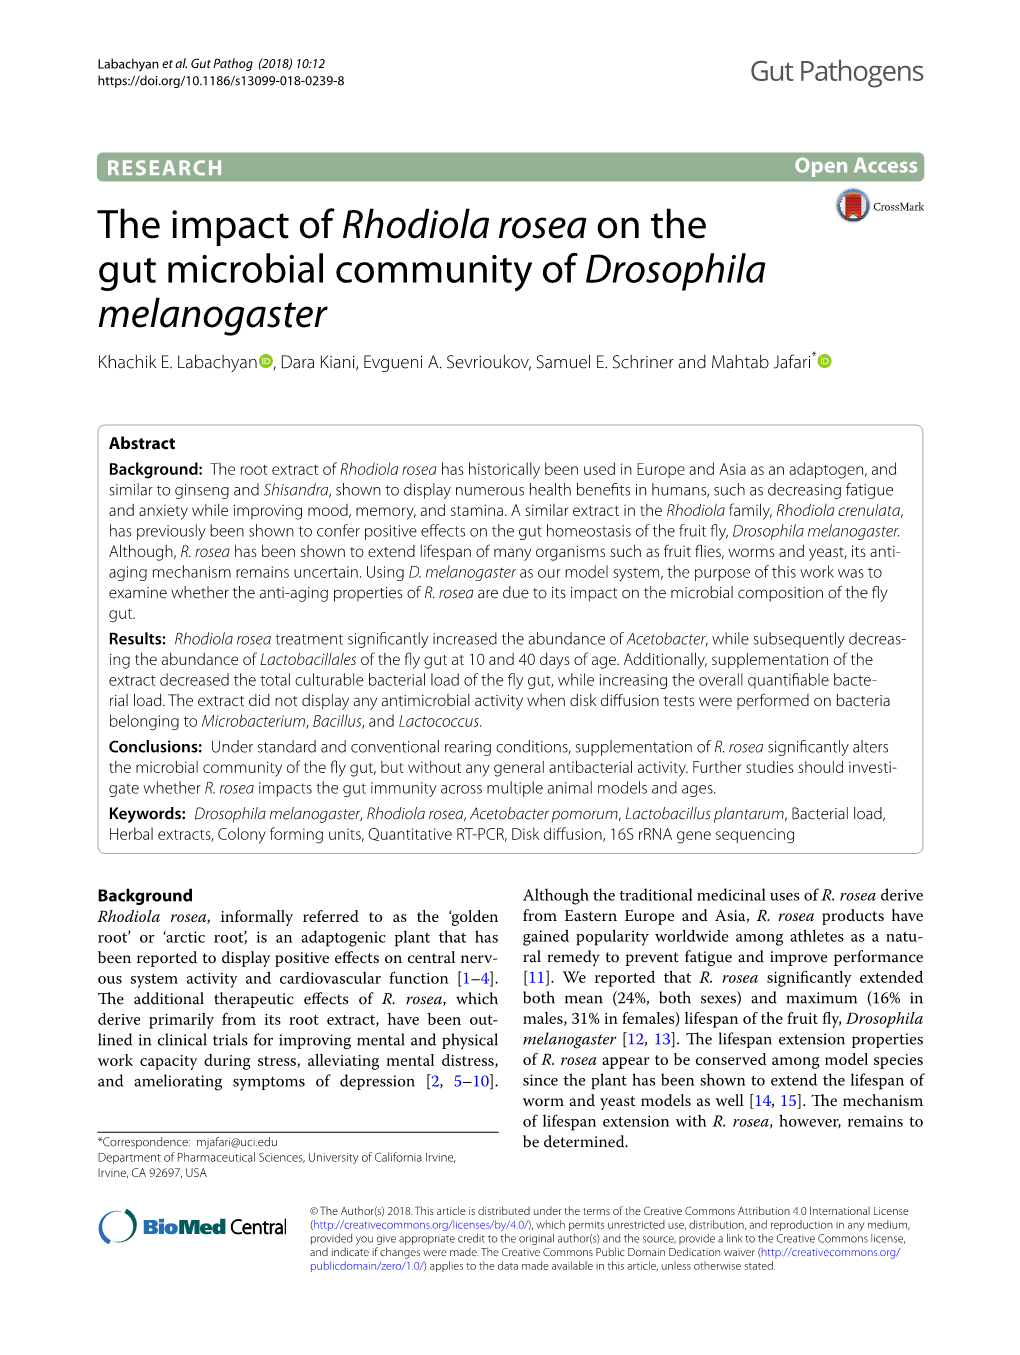 The Impact of Rhodiola Rosea on the Gut Microbial Community of Drosophila Melanogaster Khachik E